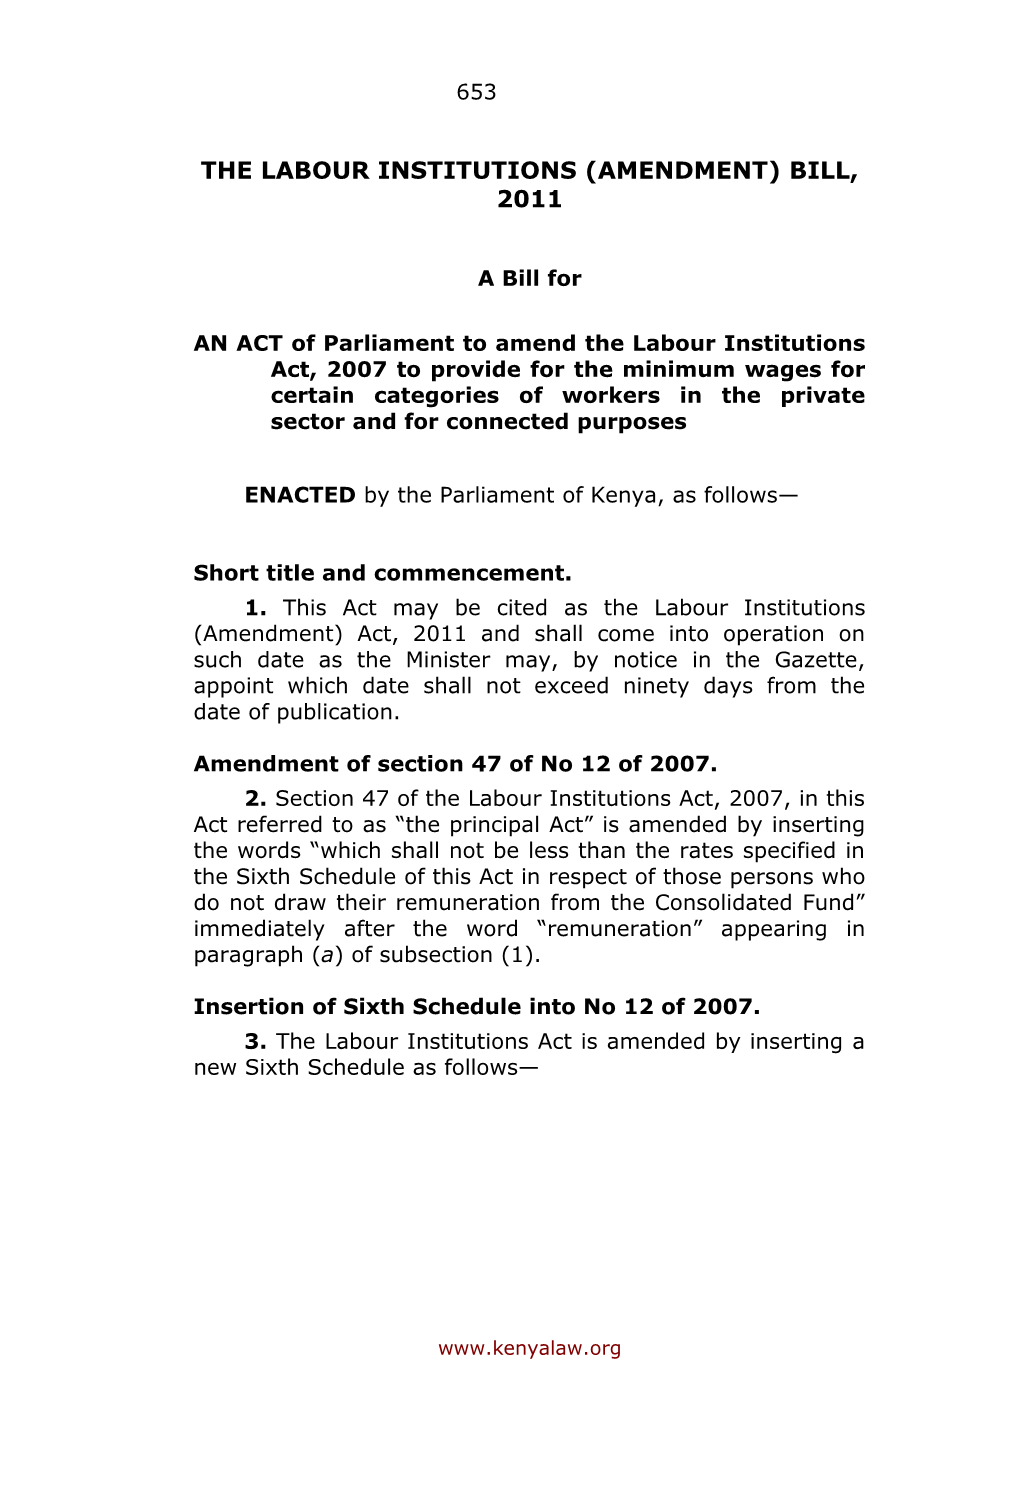 The Labour Institutions (Amendment) Bill, 2011